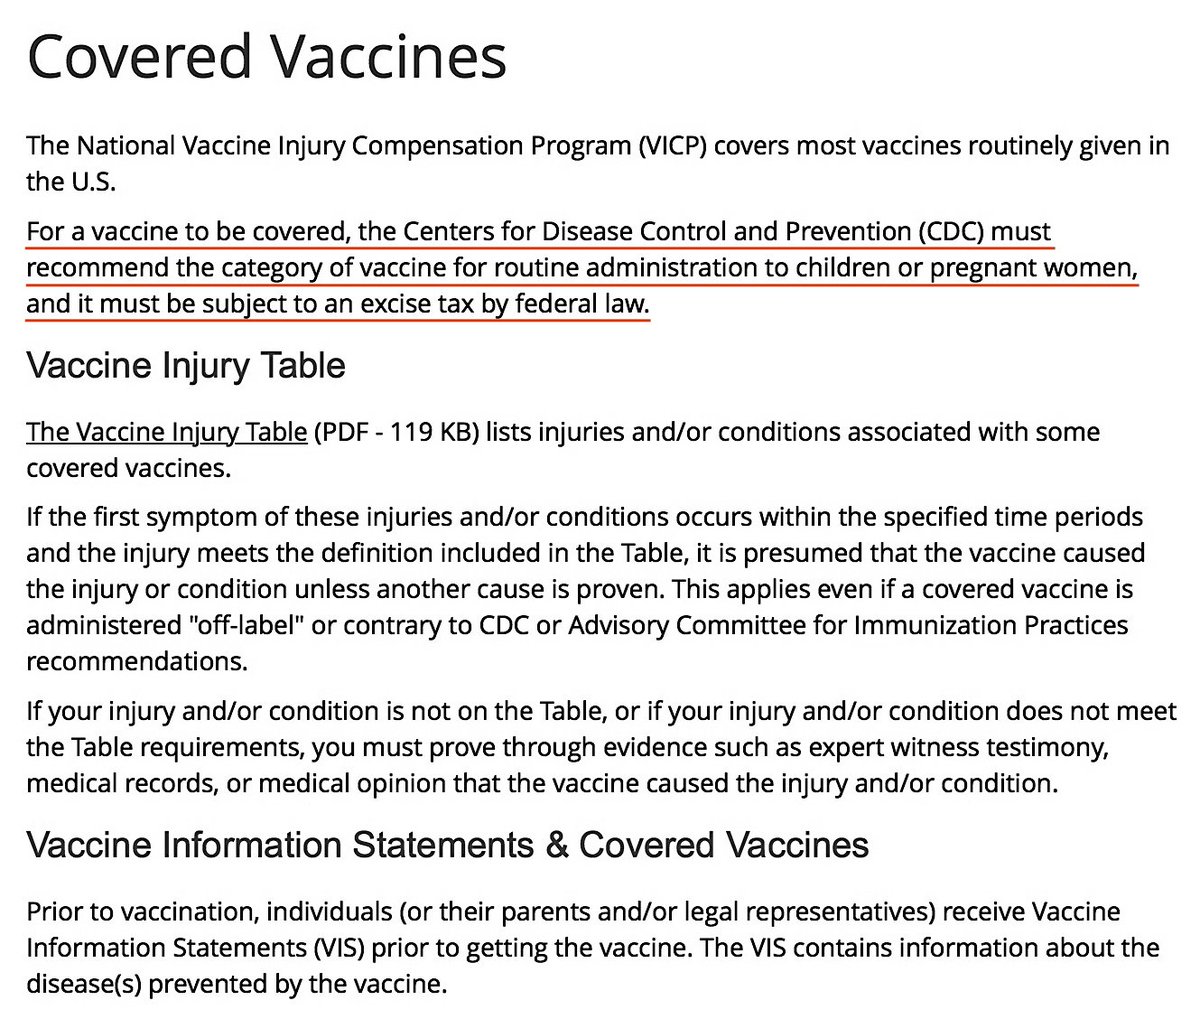 National Vaccine Injury Compensation Program. Covered Vaccines.September, 2018 https://www.hrsa.gov/vaccine-compensation/covered-vaccines/index.htmlComplete Vaccine Injury Table PDF. https://www.hrsa.gov/sites/default/files/hrsa/vaccine-compensation/vaccine-injury-table.pdf #QAnon  #Vaccine  #Autism  @potus